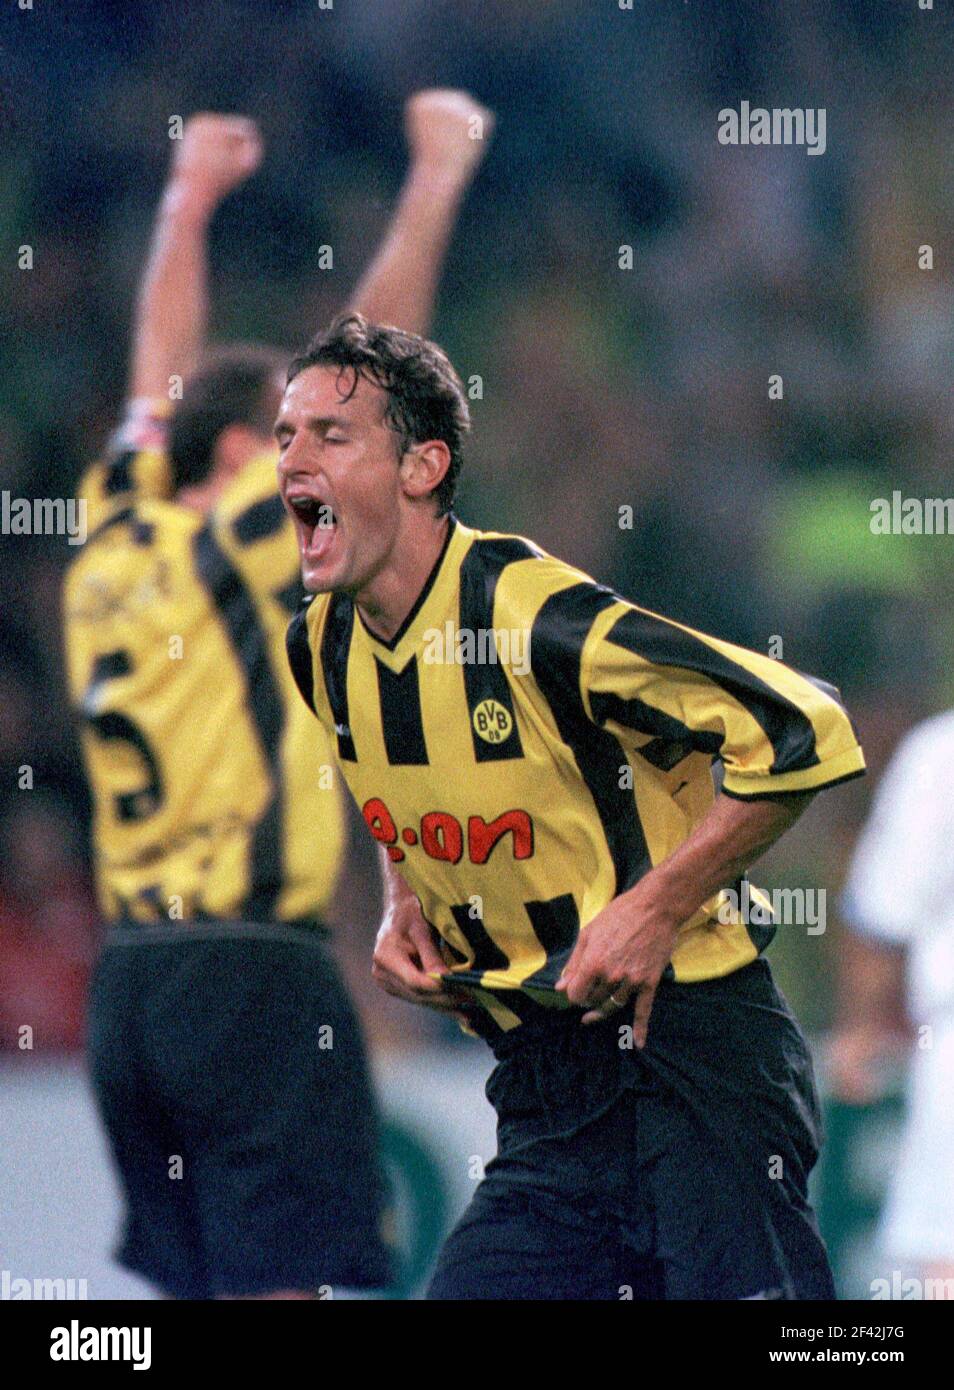 Dortmund, Germany 11.8. 2000, Football:  Bundesliga season 2000/01,  Borussia Dortmund (BVB, yellow) vs Hansa Rostock (HRO, white) 1:0 - Heiko HERRLICH (BVB) Stock Photo